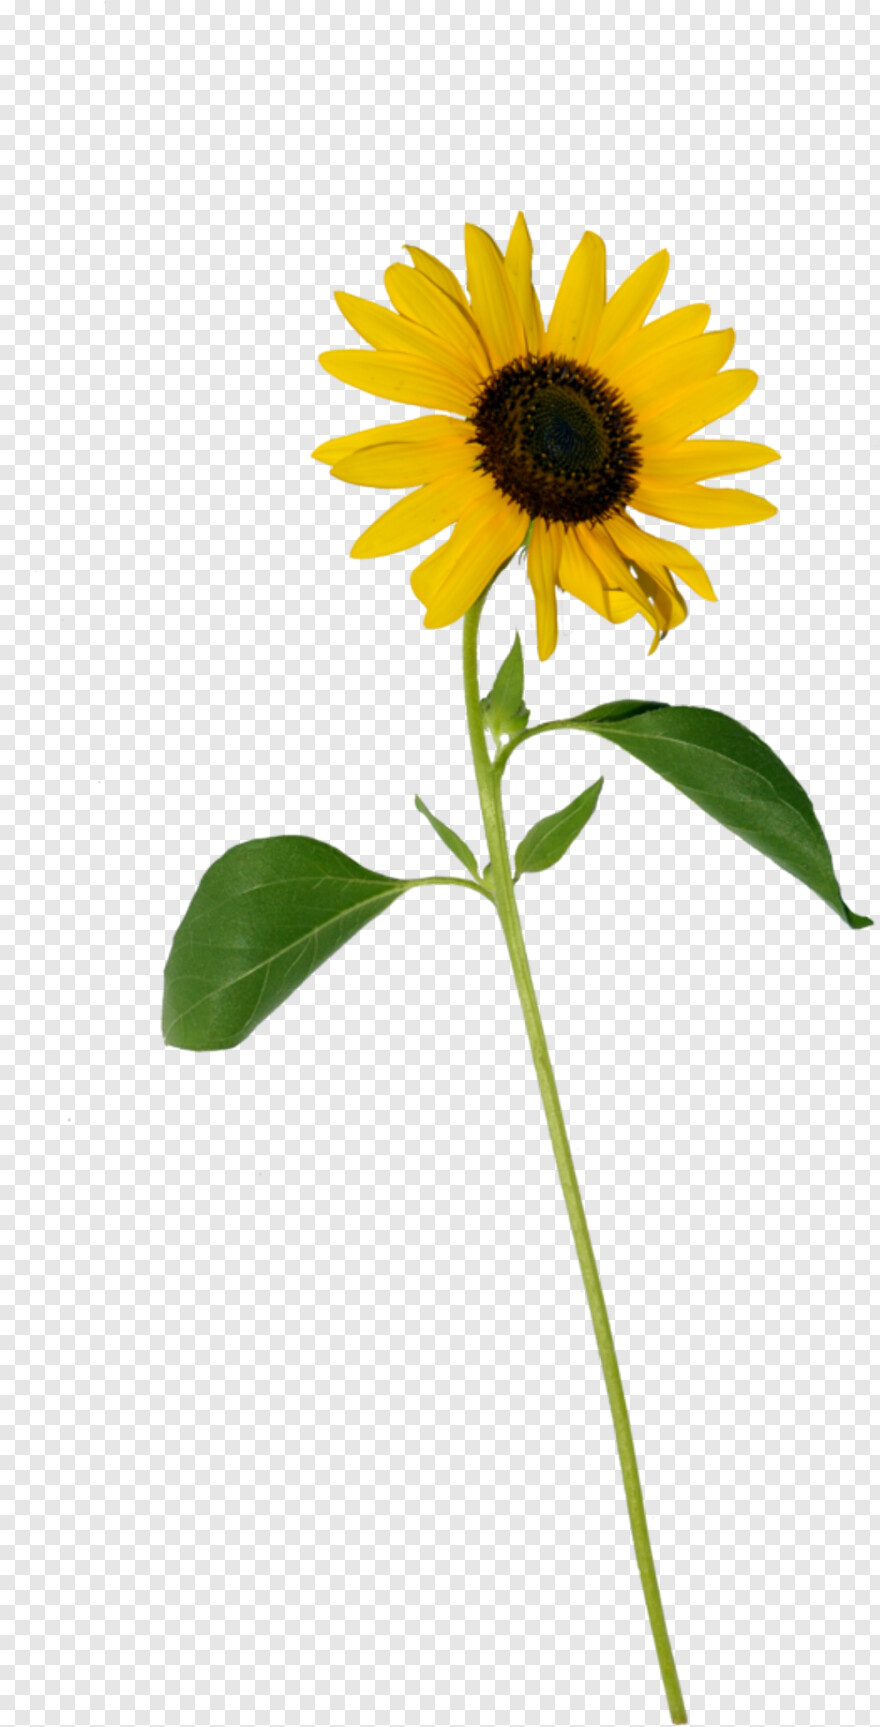 sunflower # 957665